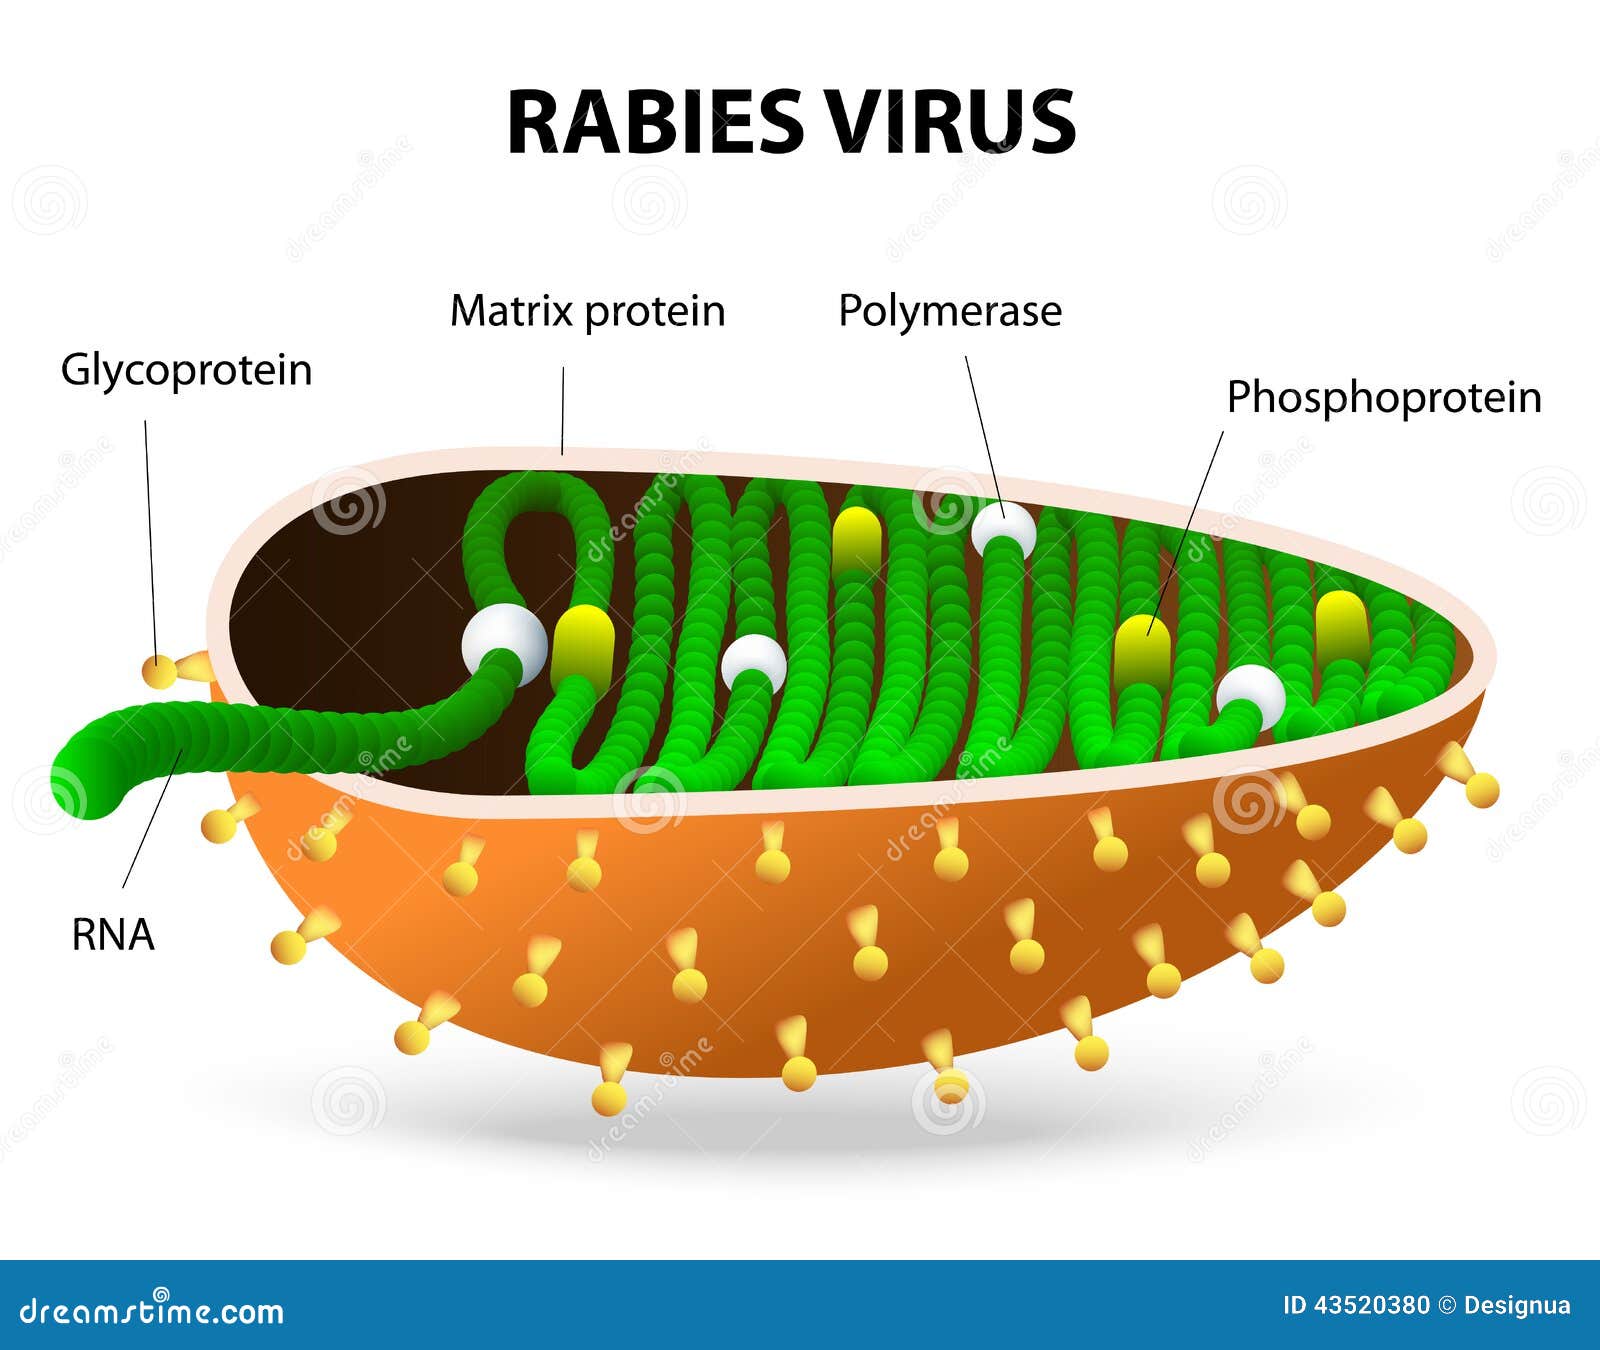 rabies virus or rhabdovirus